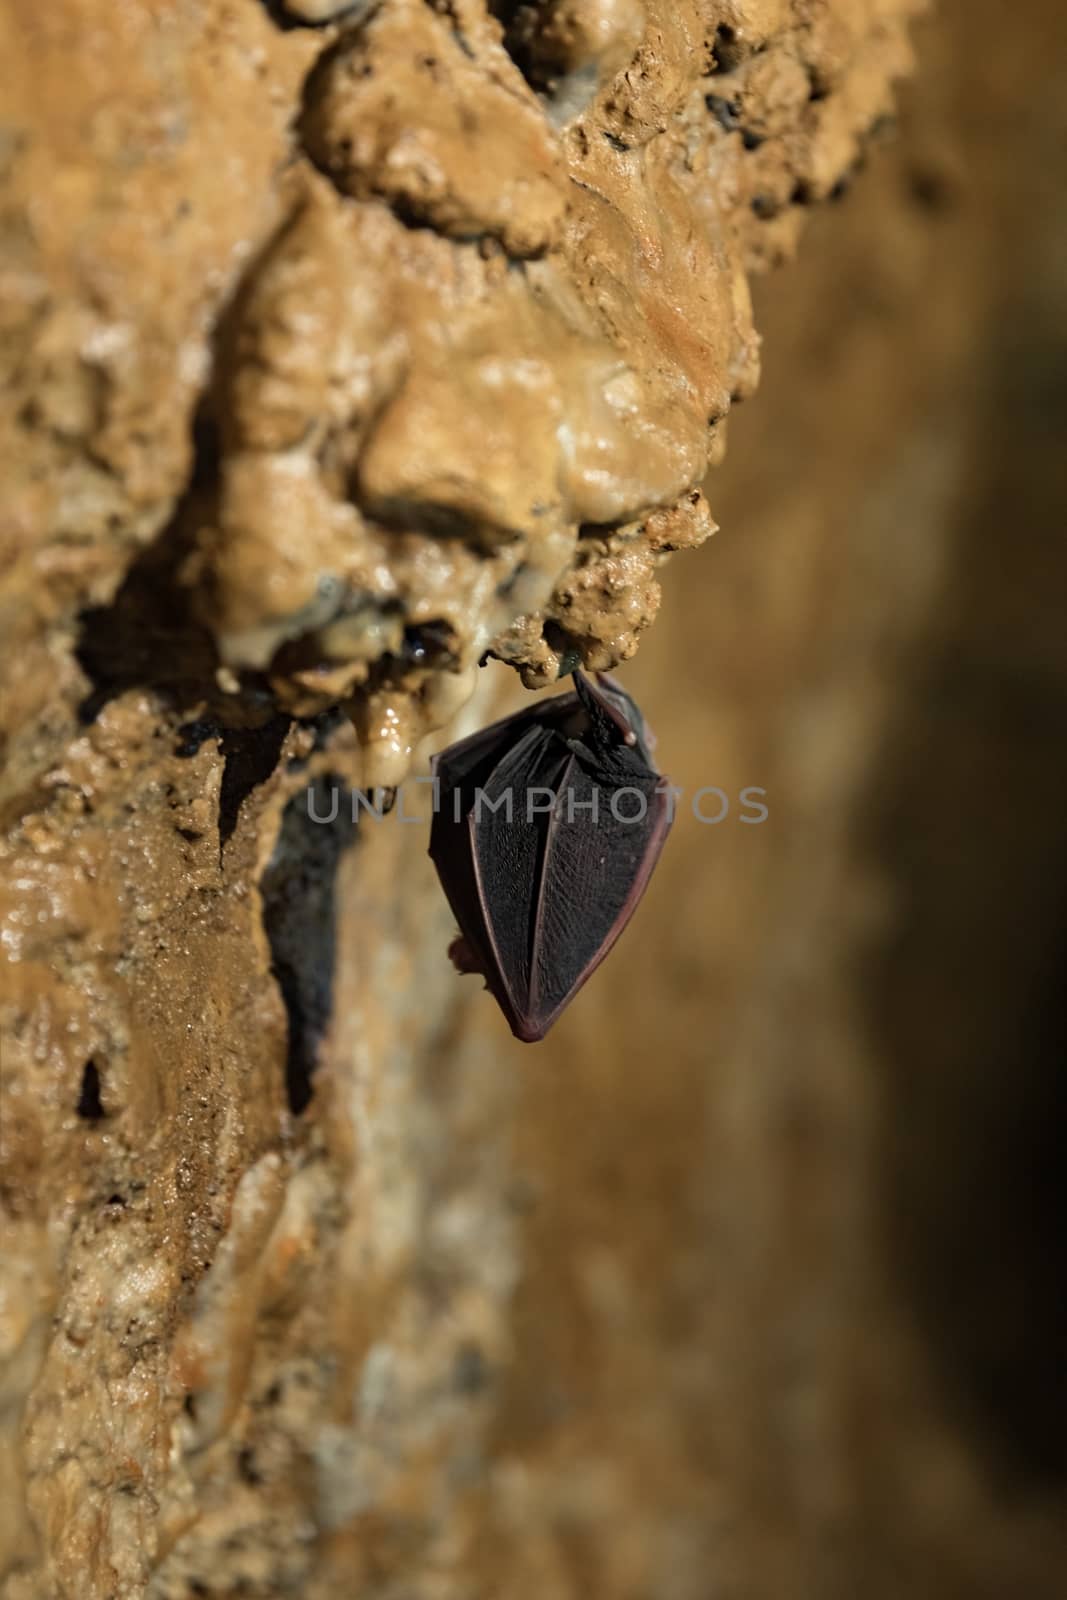 Bat sleeping in the cave closeup photo